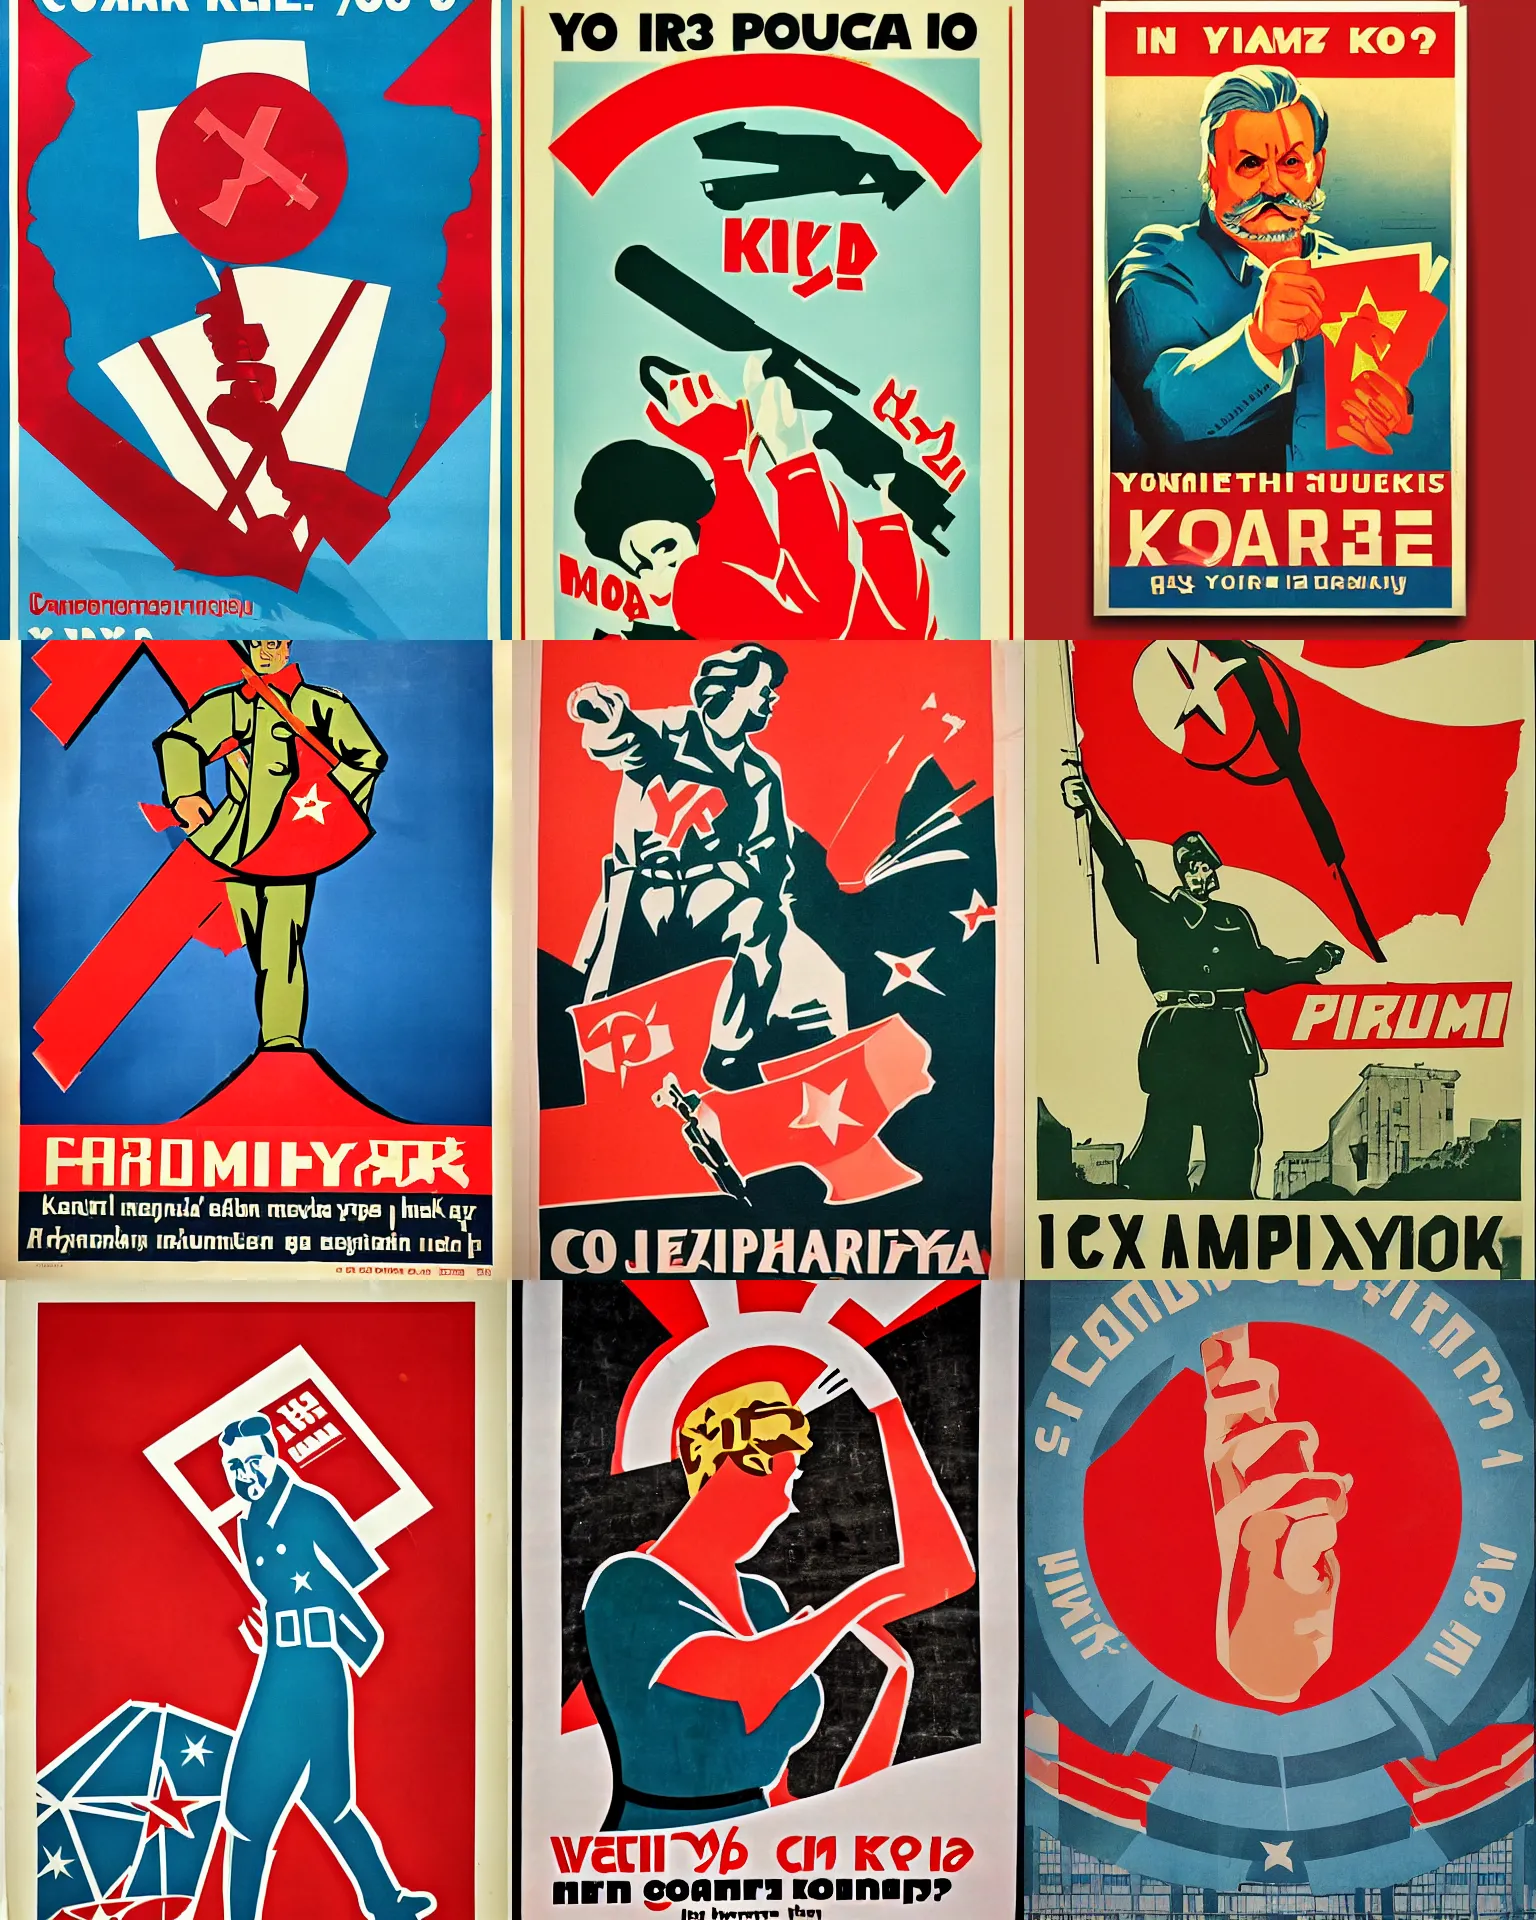 Prompt: communist propaganda poster, y 2 k aesthetic